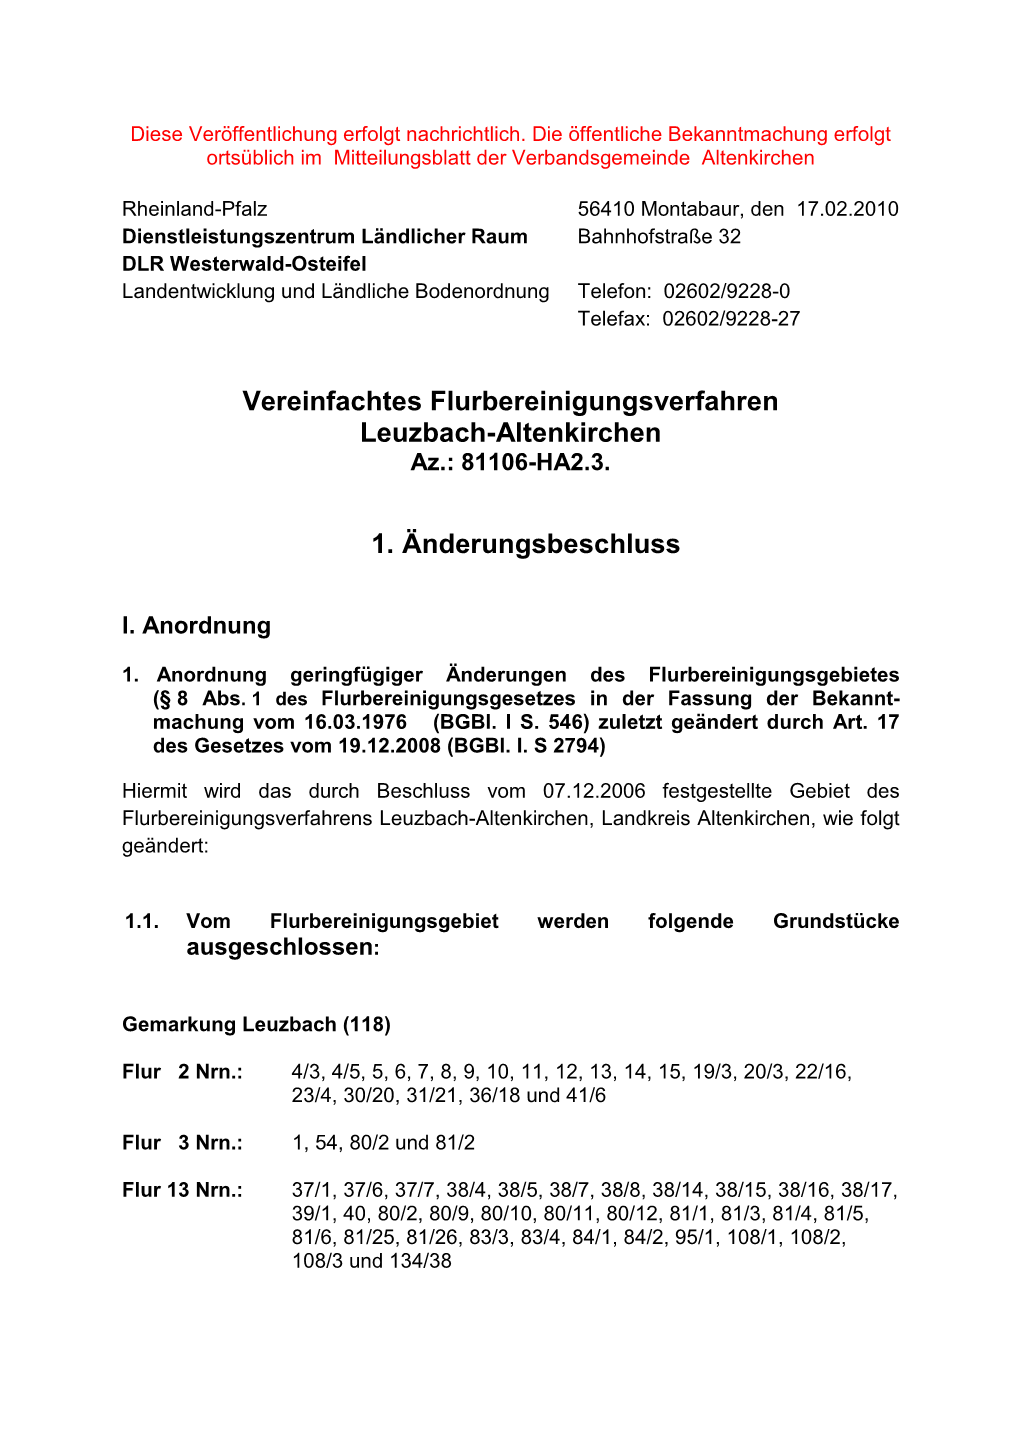 Vereinfachtes Flurbereinigungsverfahren Leuzbach-Altenkirchen Az.: 81106-HA2.3